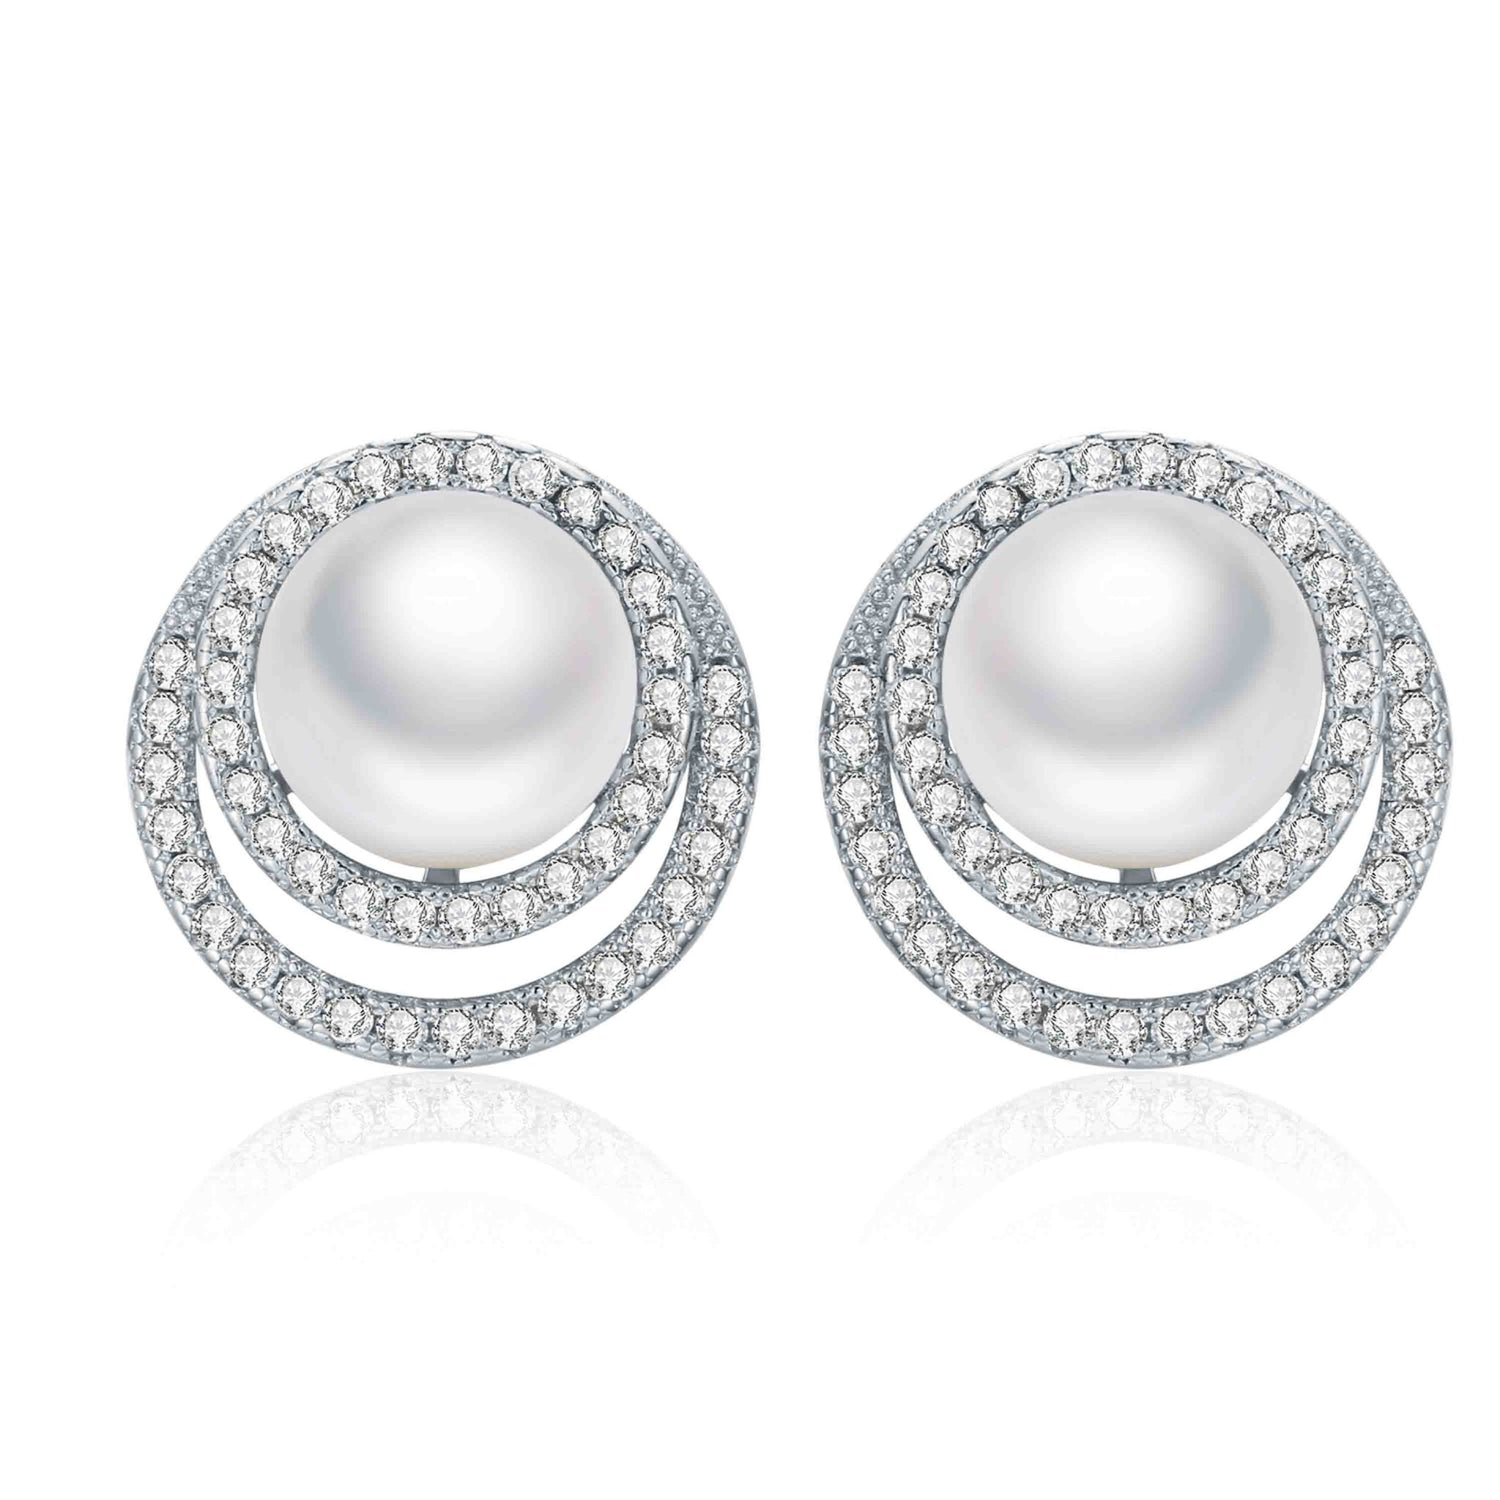 Full Moon Necklace & Earrings Set - Timeless Pearl